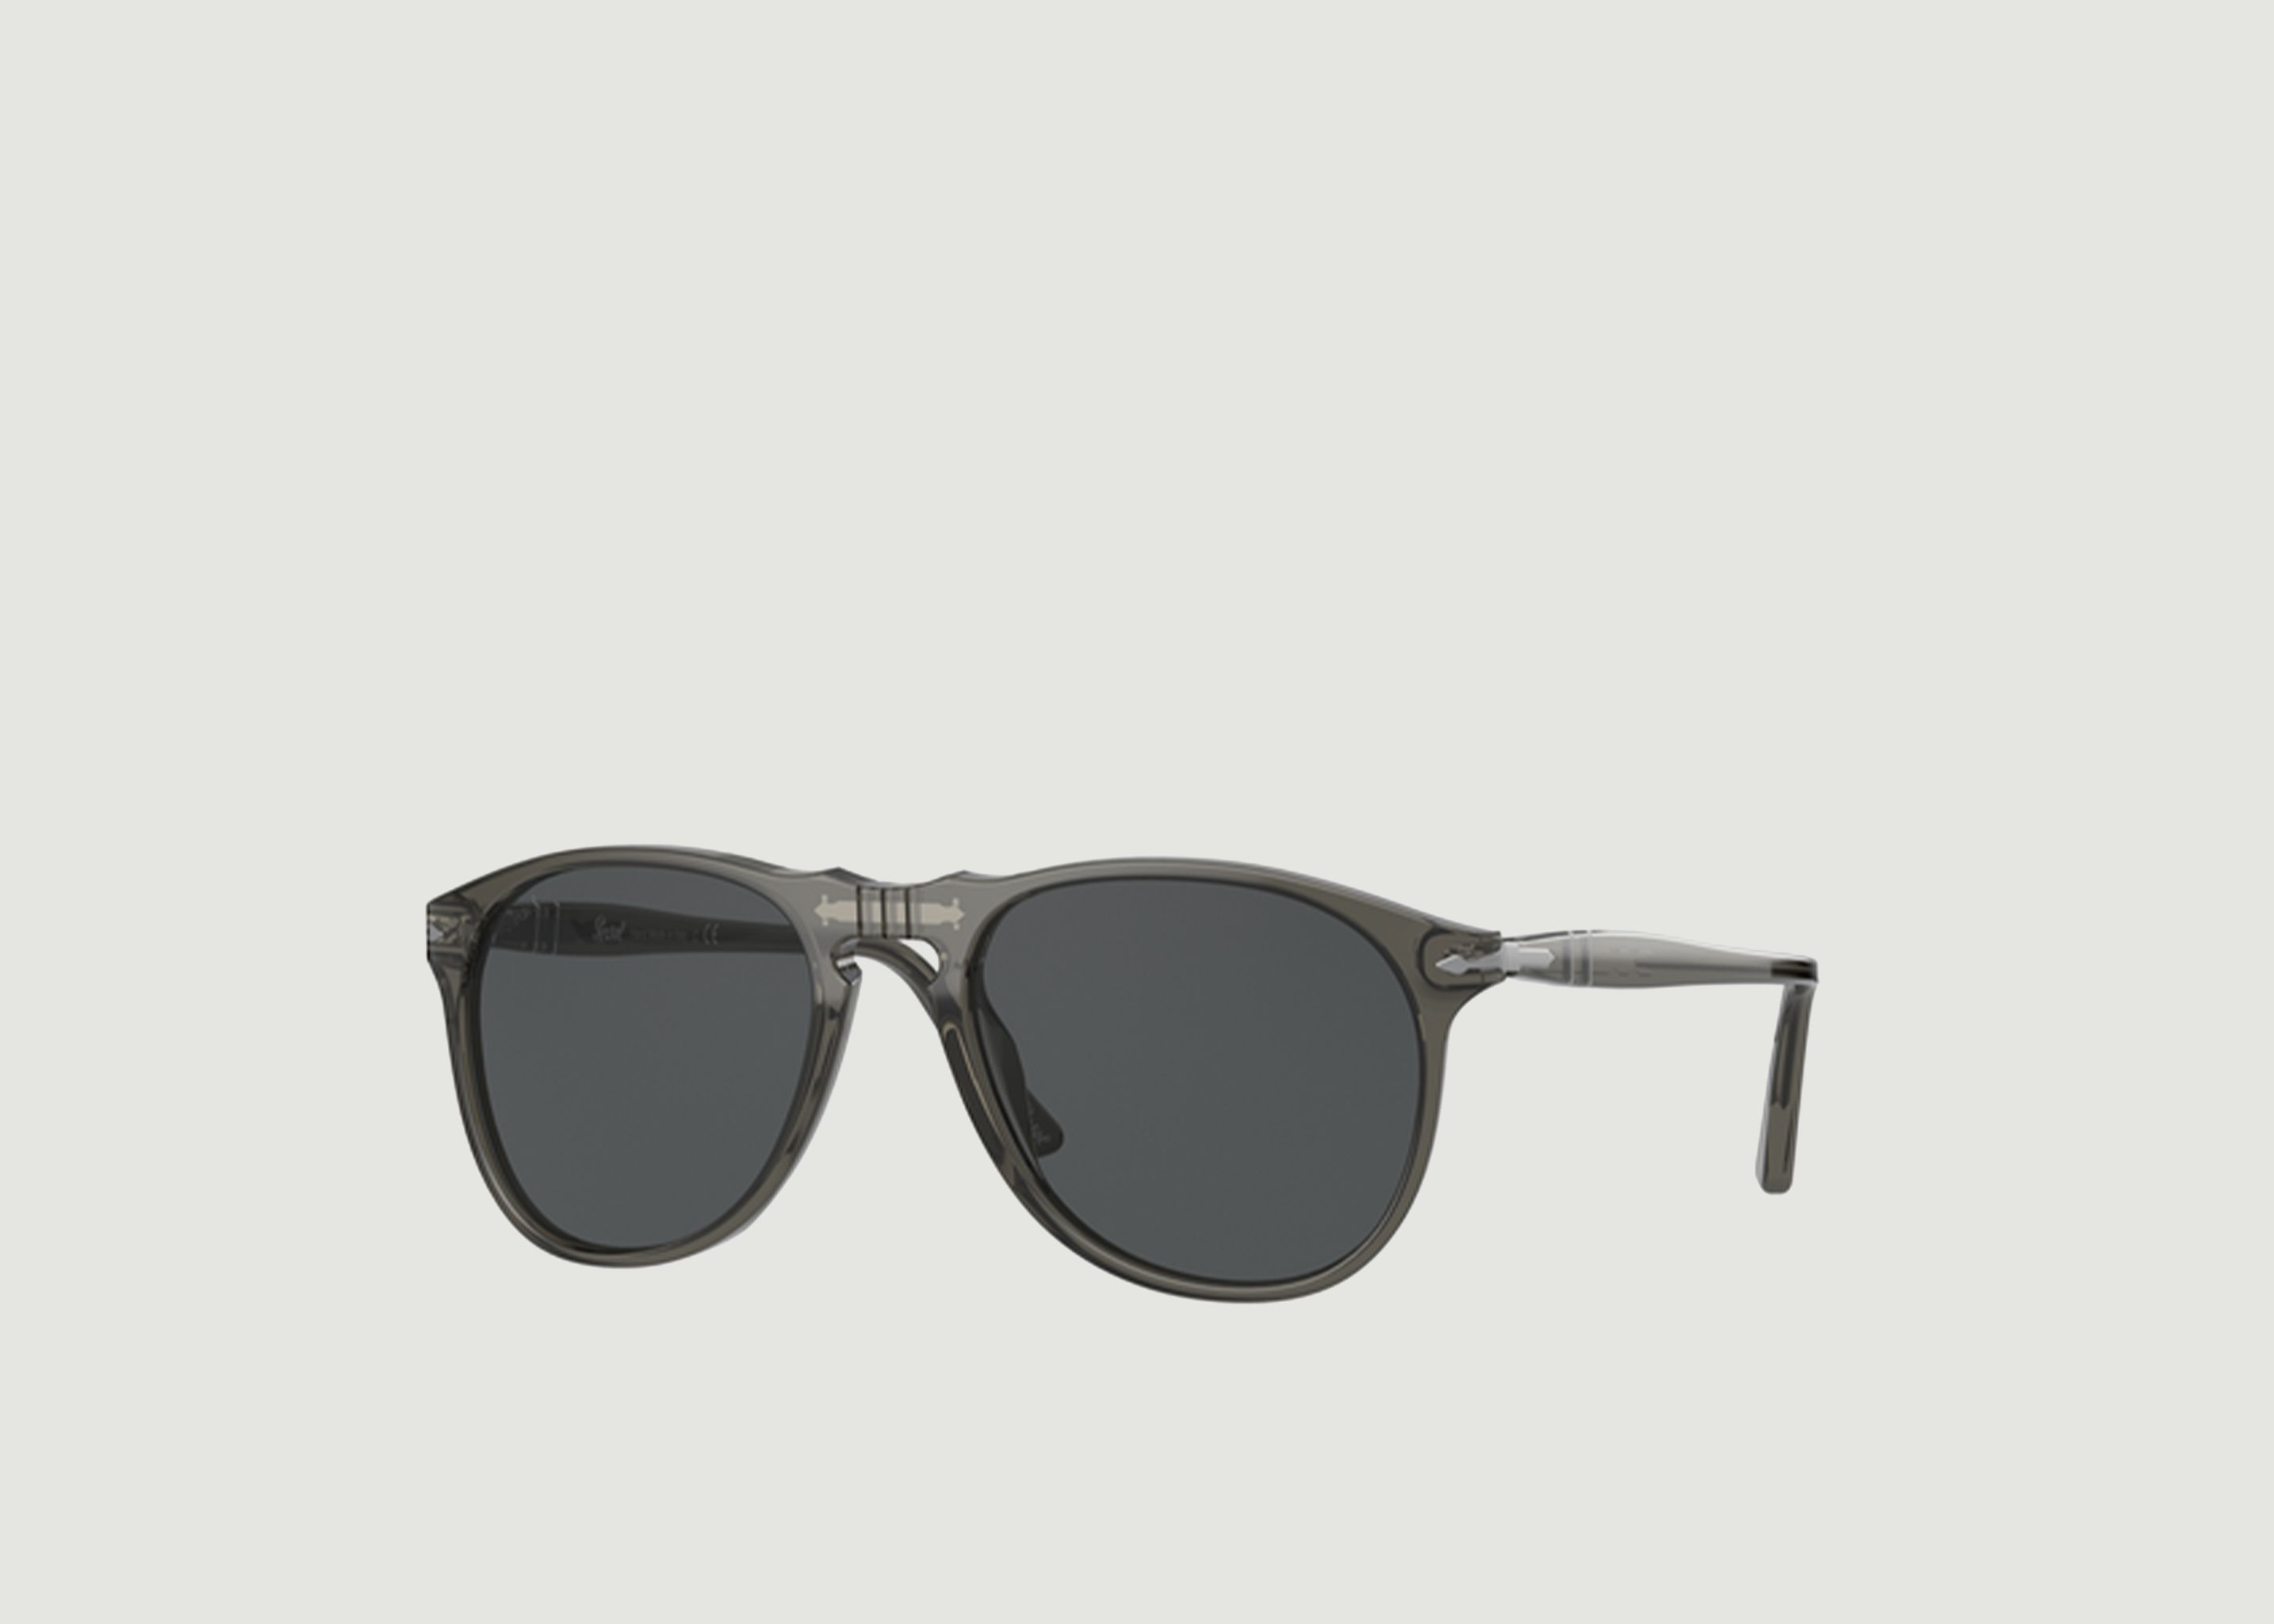 Persol 649 Series Sunglasses - Persol